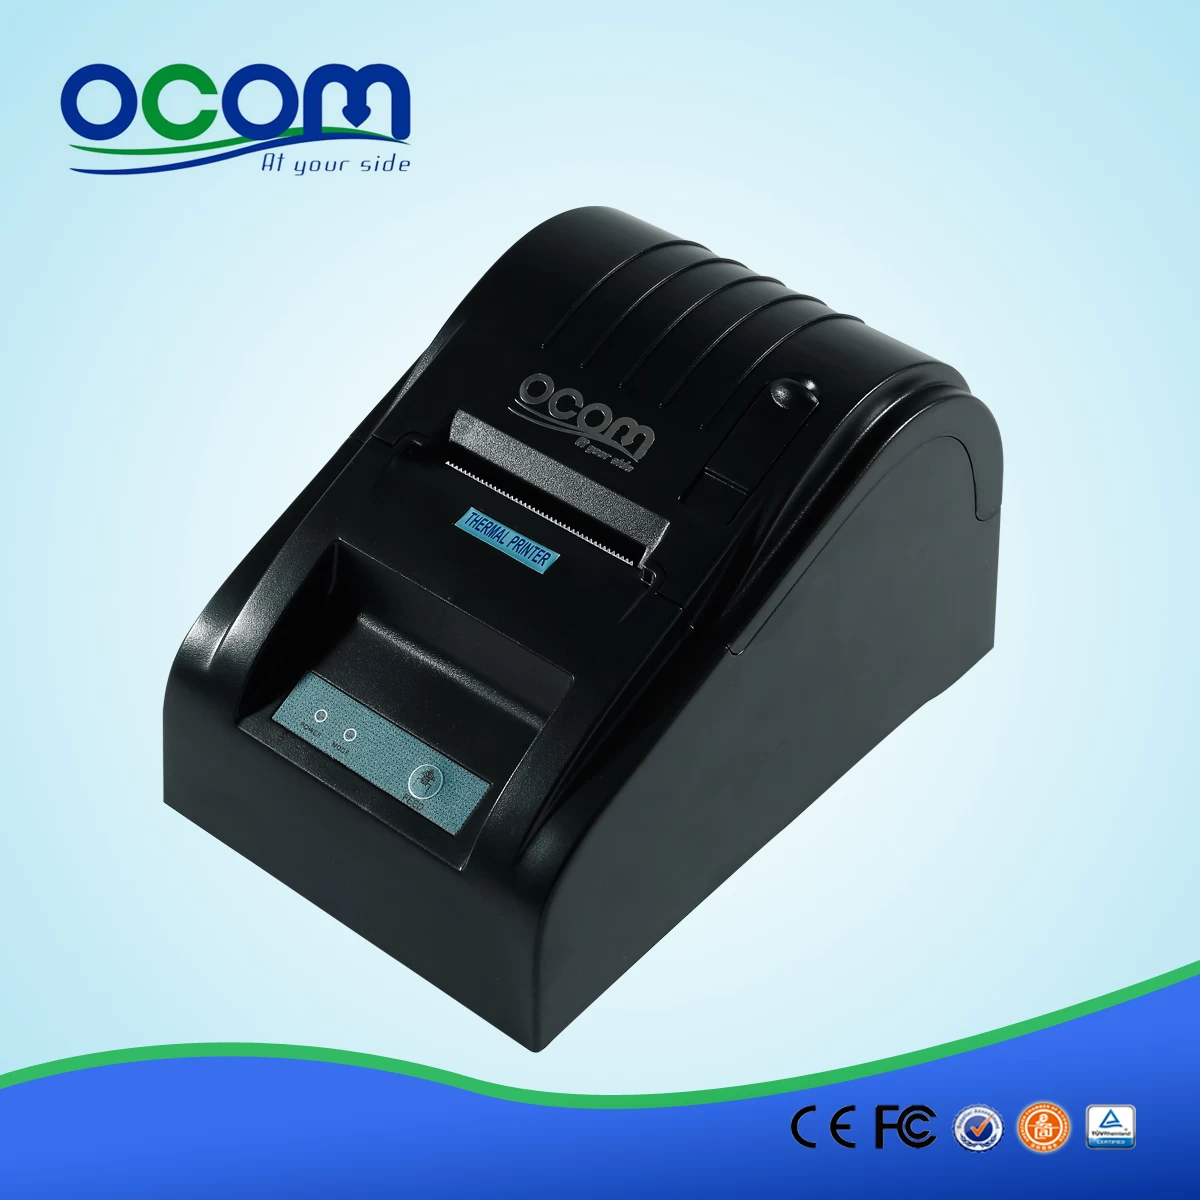 58mm pos Ticket thermal printer OCPP-585